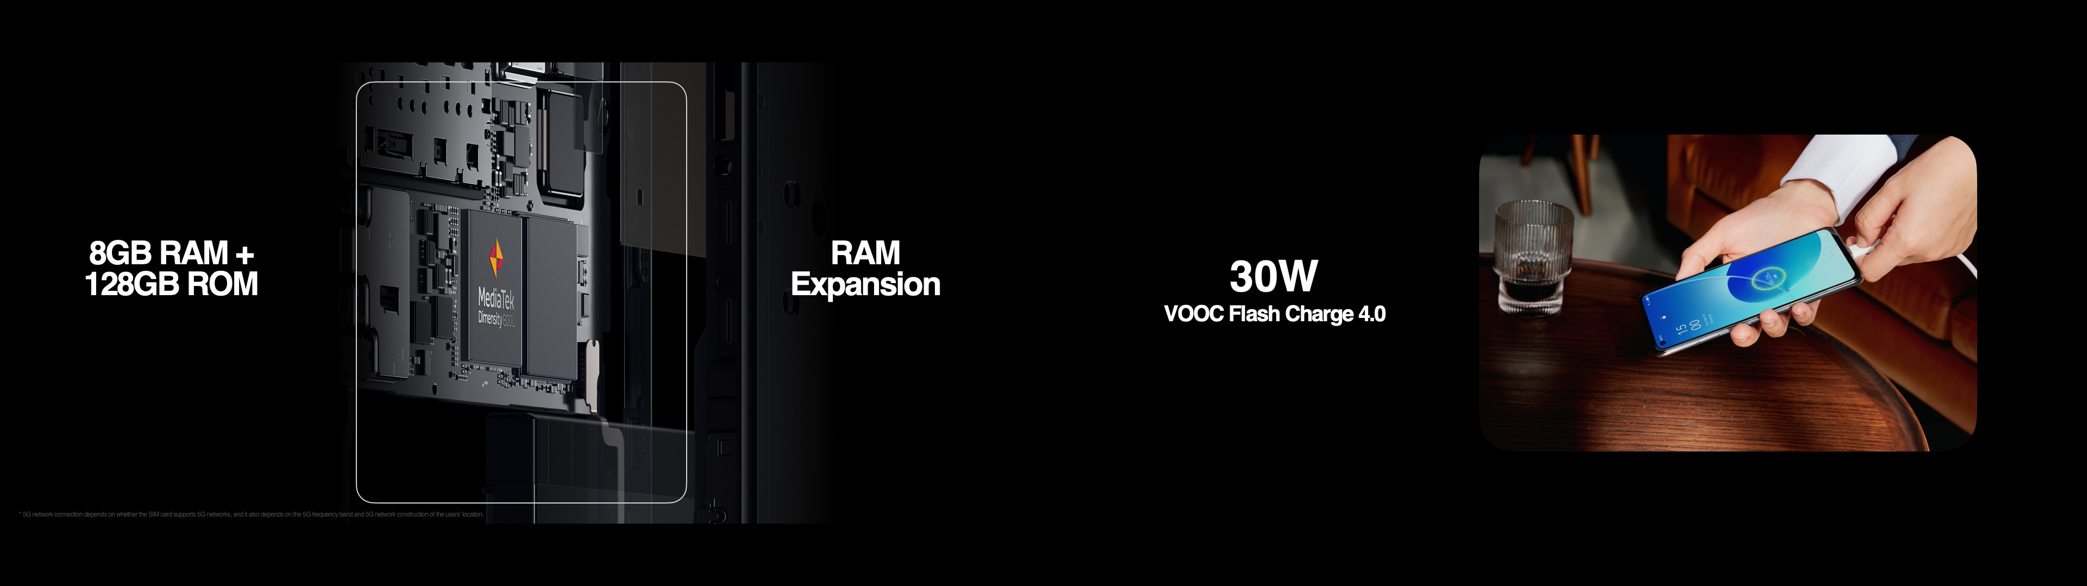 4 OPPO Reno6 Z 5G Performance | Enco Air | ออปโป้ เปิดตัว OPPO Reno6 Z 5G สุดยอดสมาร์ทโฟนสำหรับถ่ายภาพ และหูฟังไร้สายรุ่นล่าสุด OPPO Enco Air ในราคาเพียง 1,999 บาท